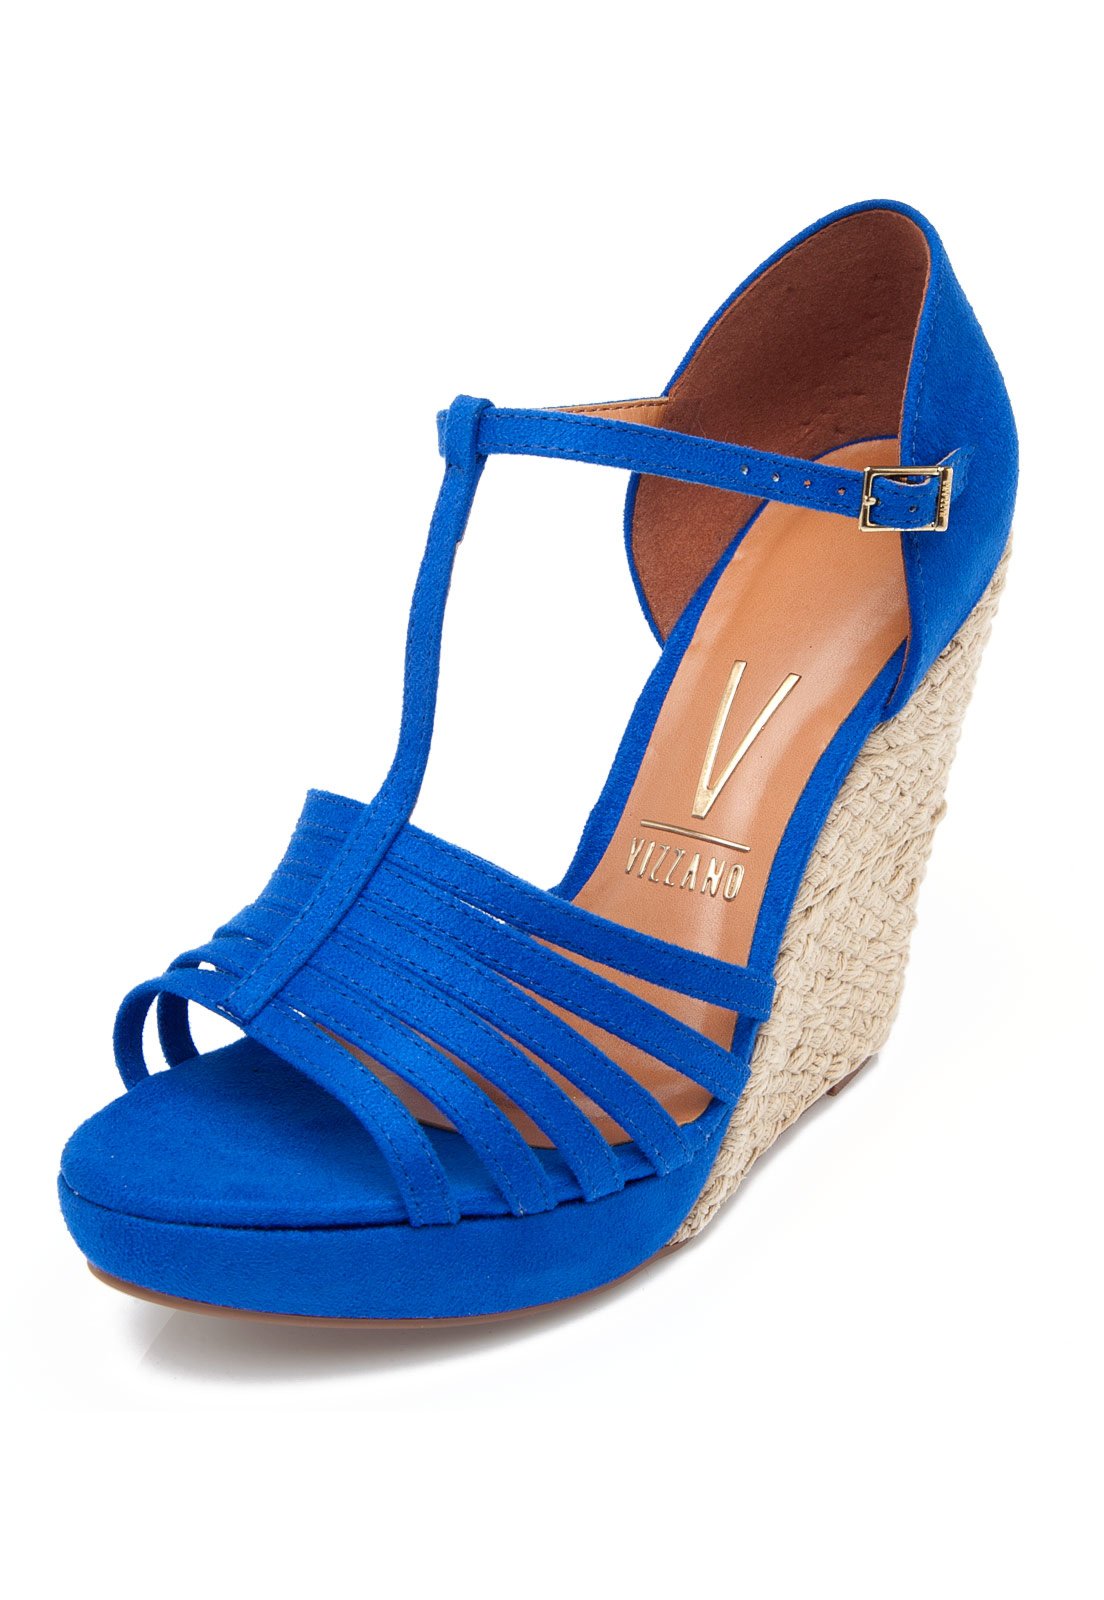 sandalia anabela vizzano azul